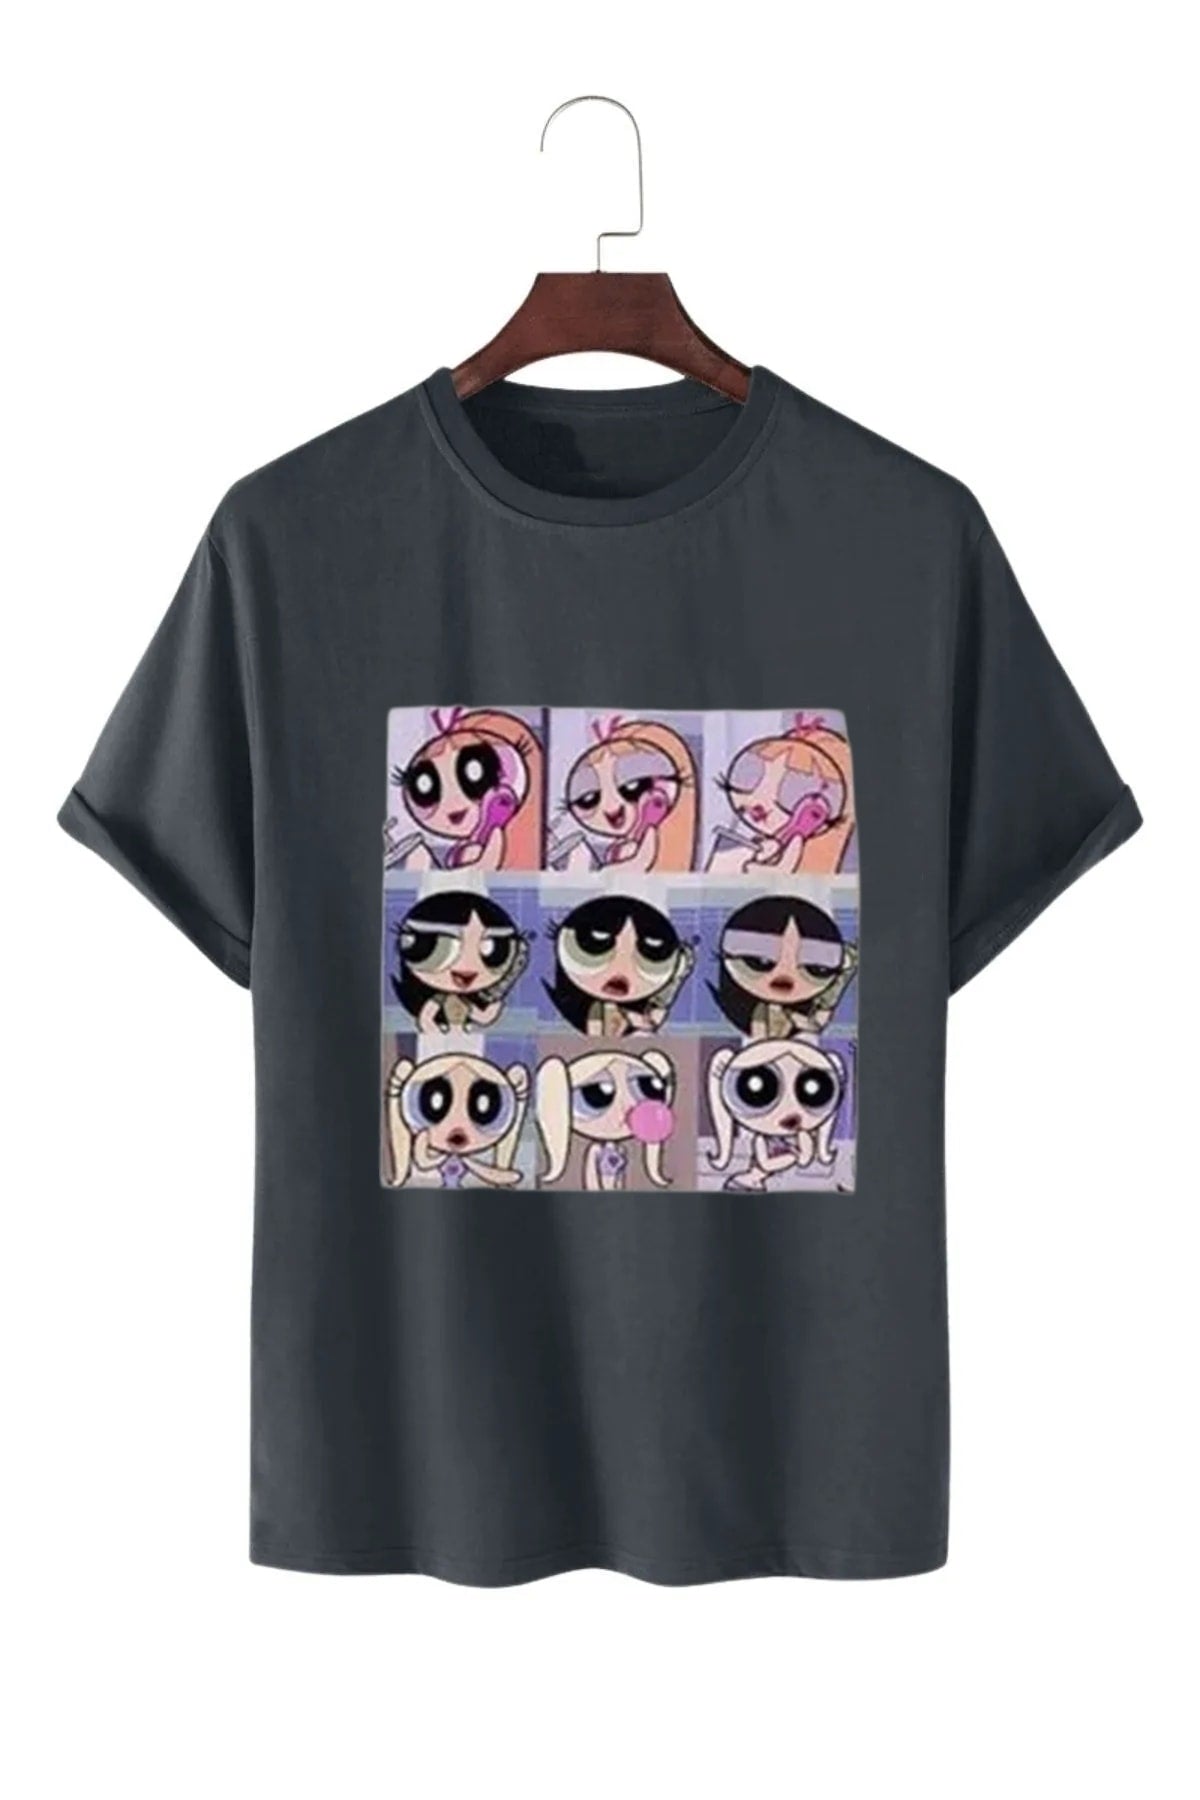 Powergirls Printed Kids T-Shirt